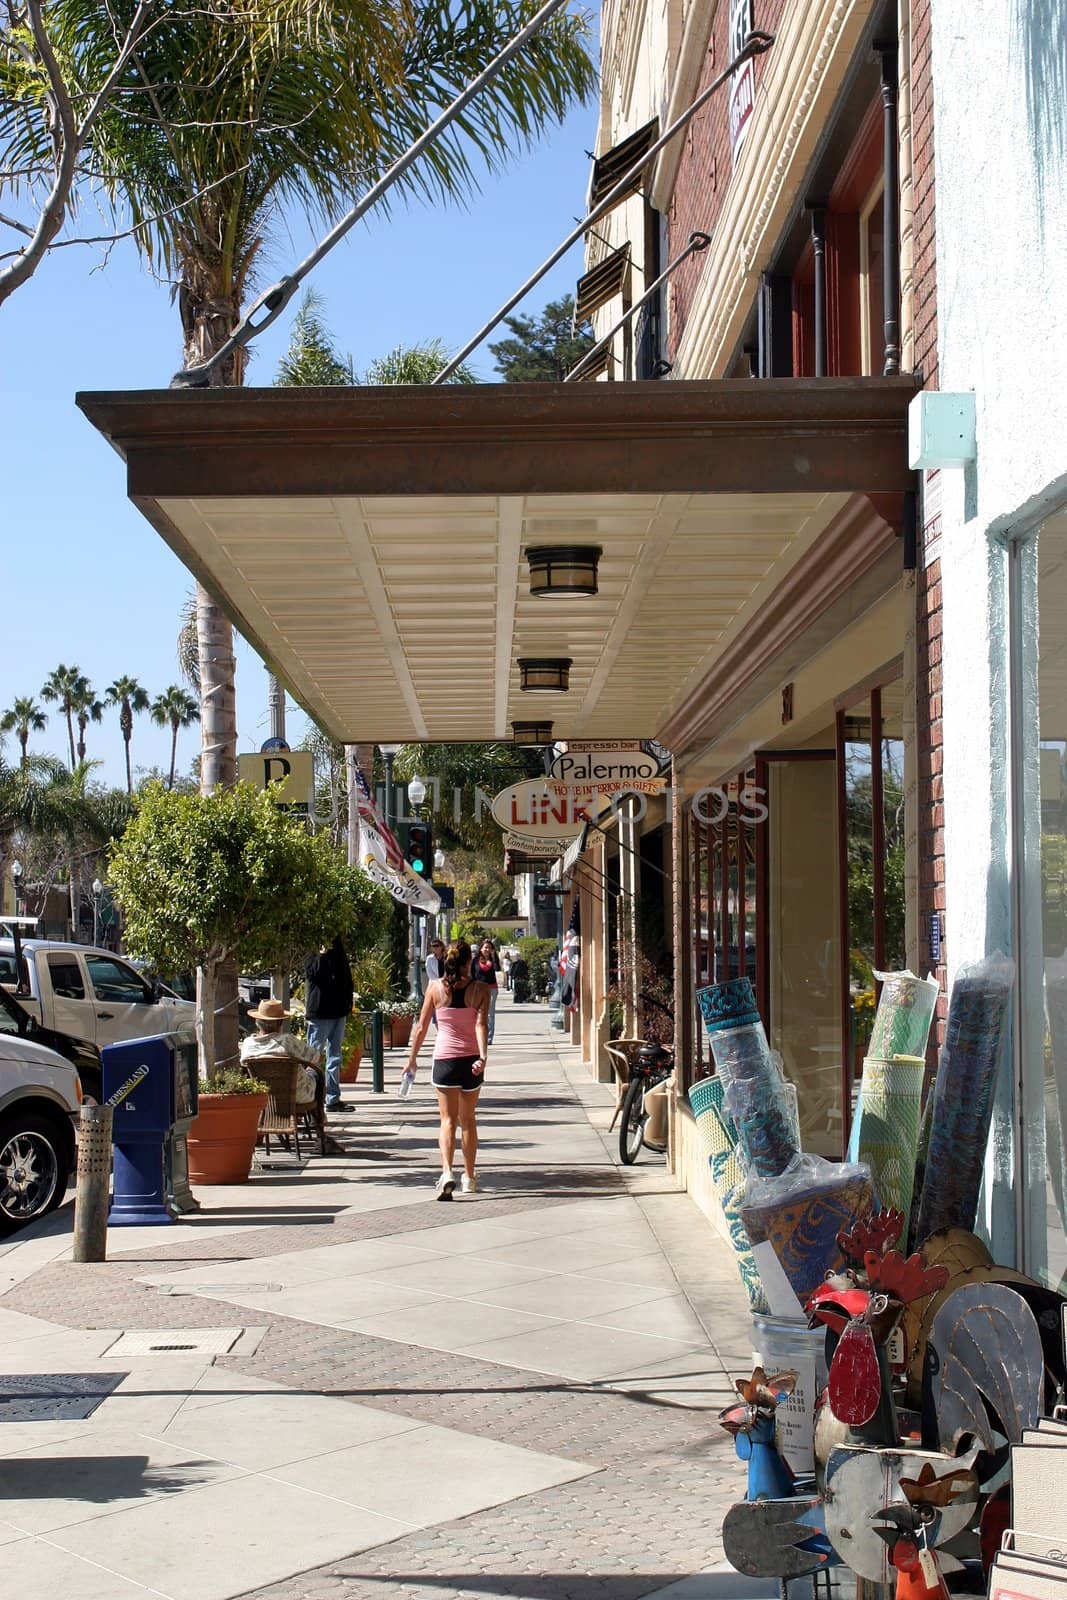 Sidewalk on main street in Ventura California with shops